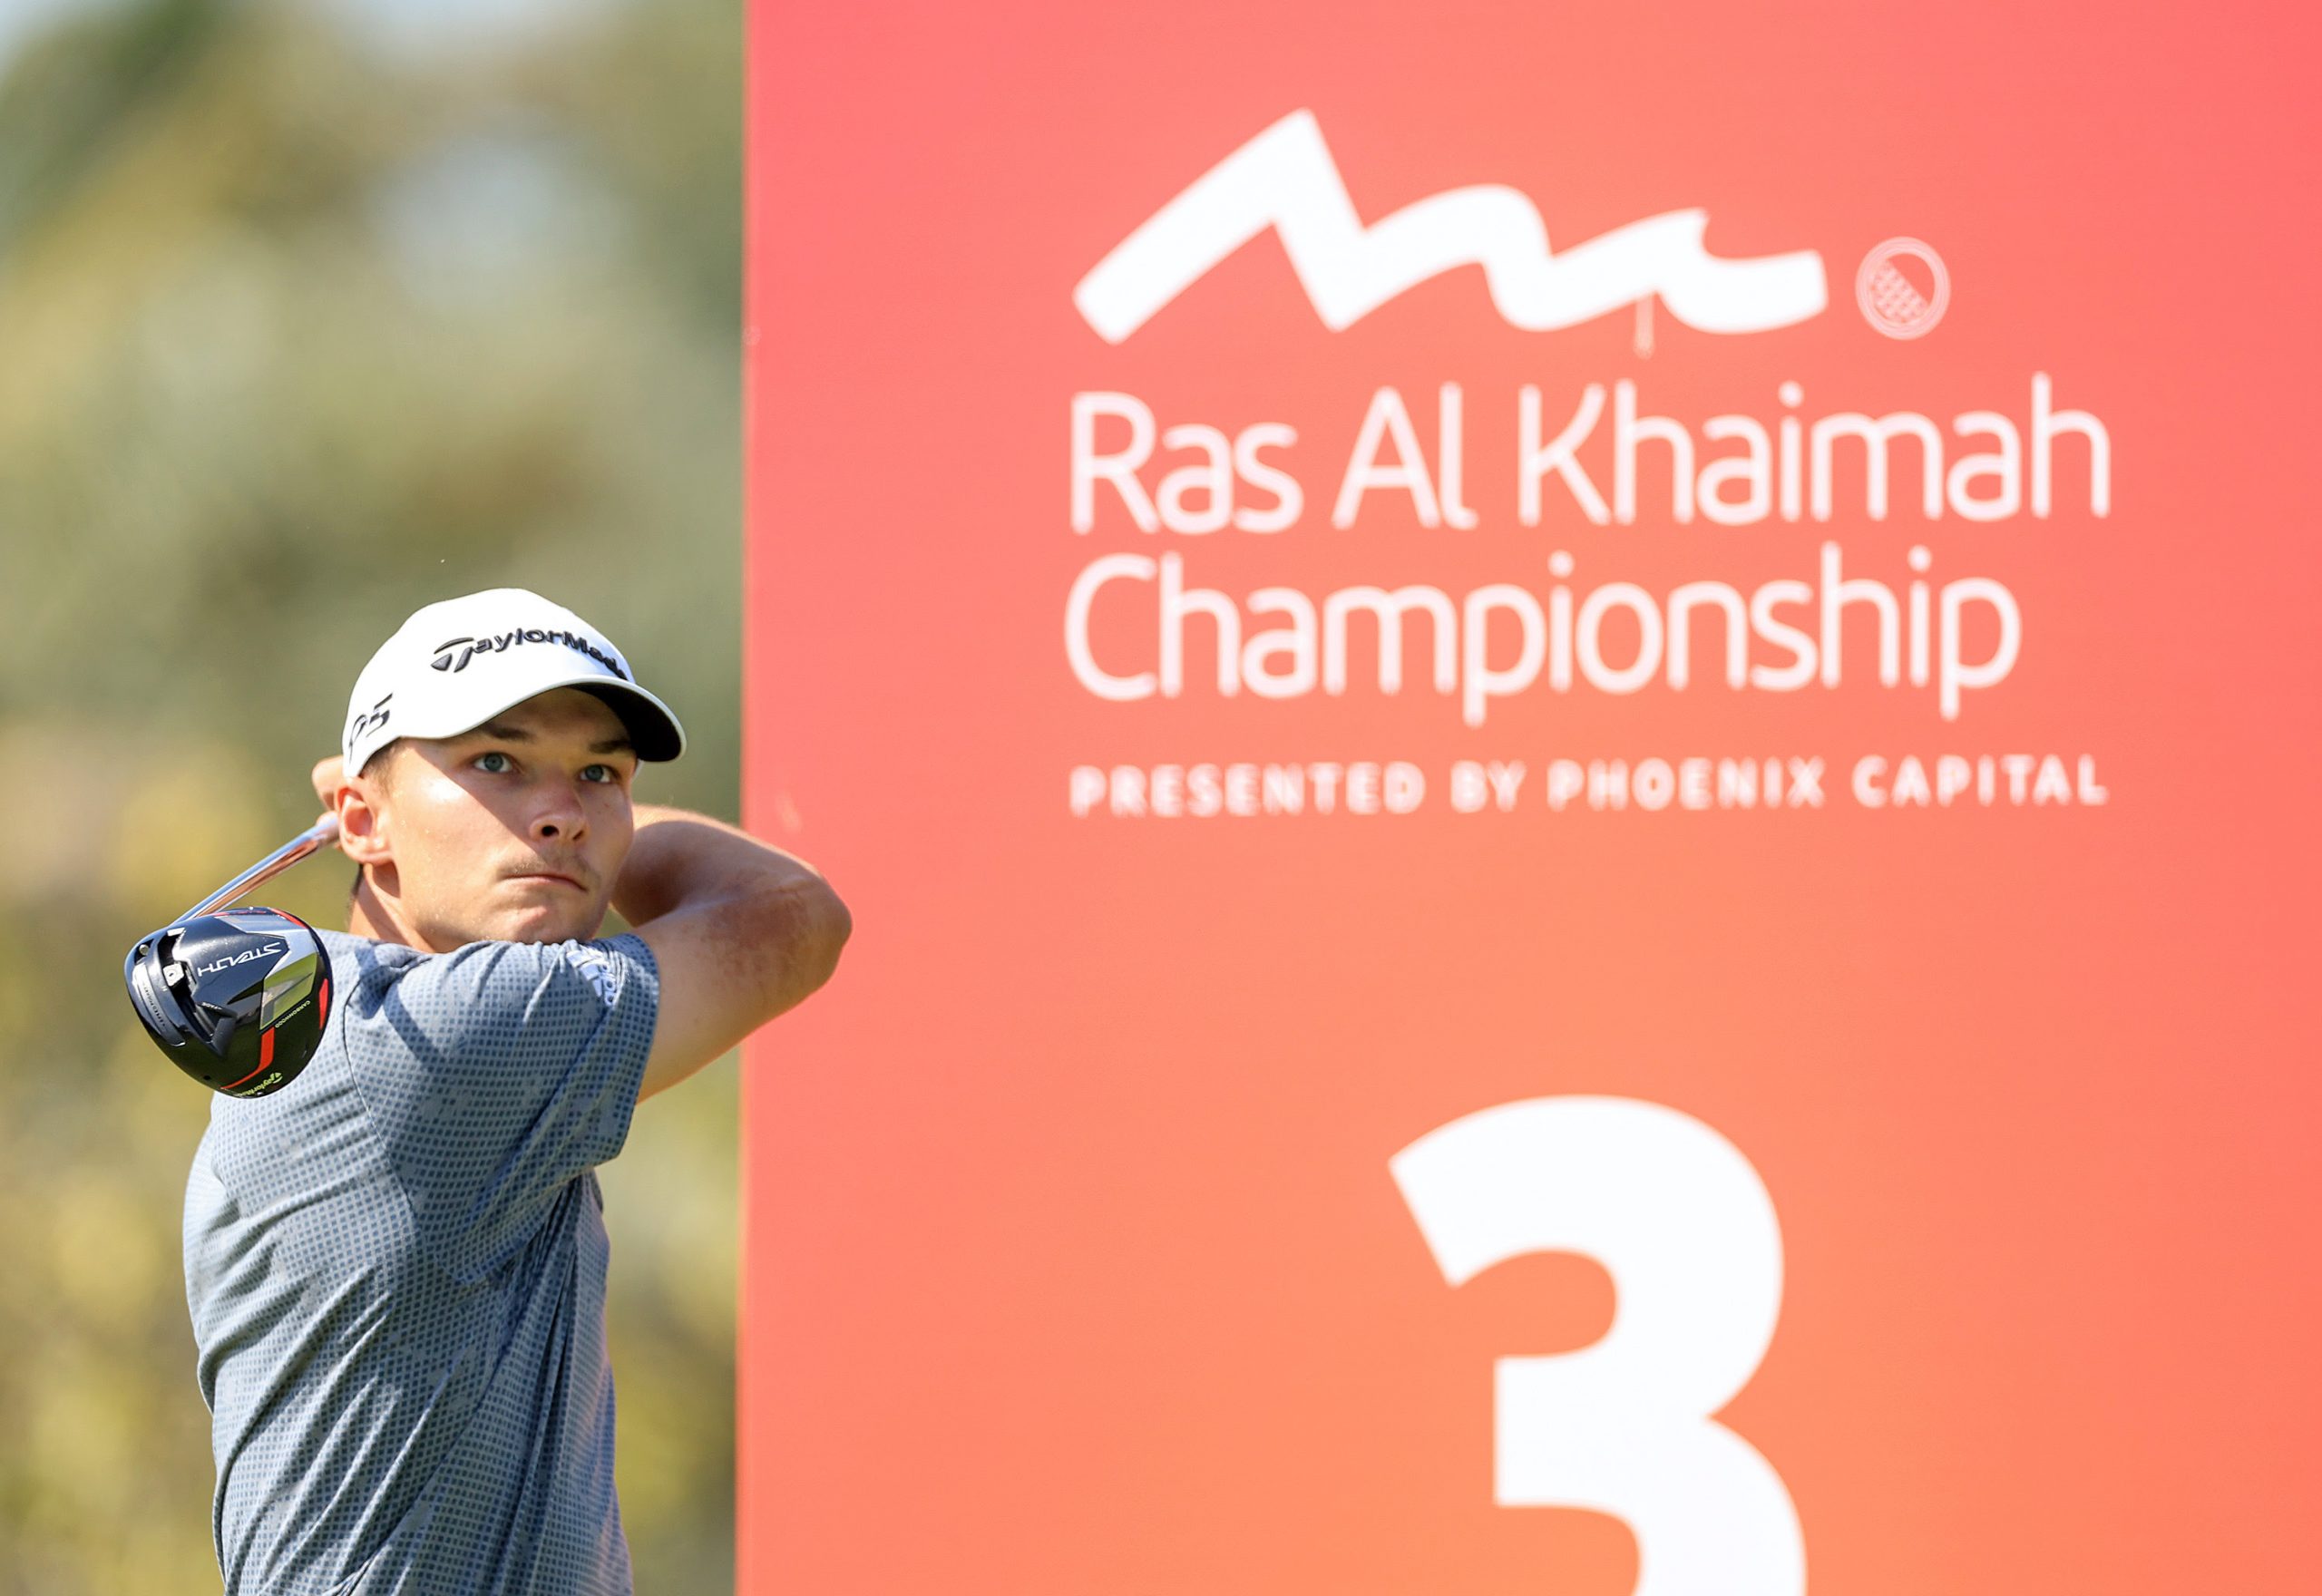 Nicolai Højgaard snatches lead at Ras Al Khaimah Championship